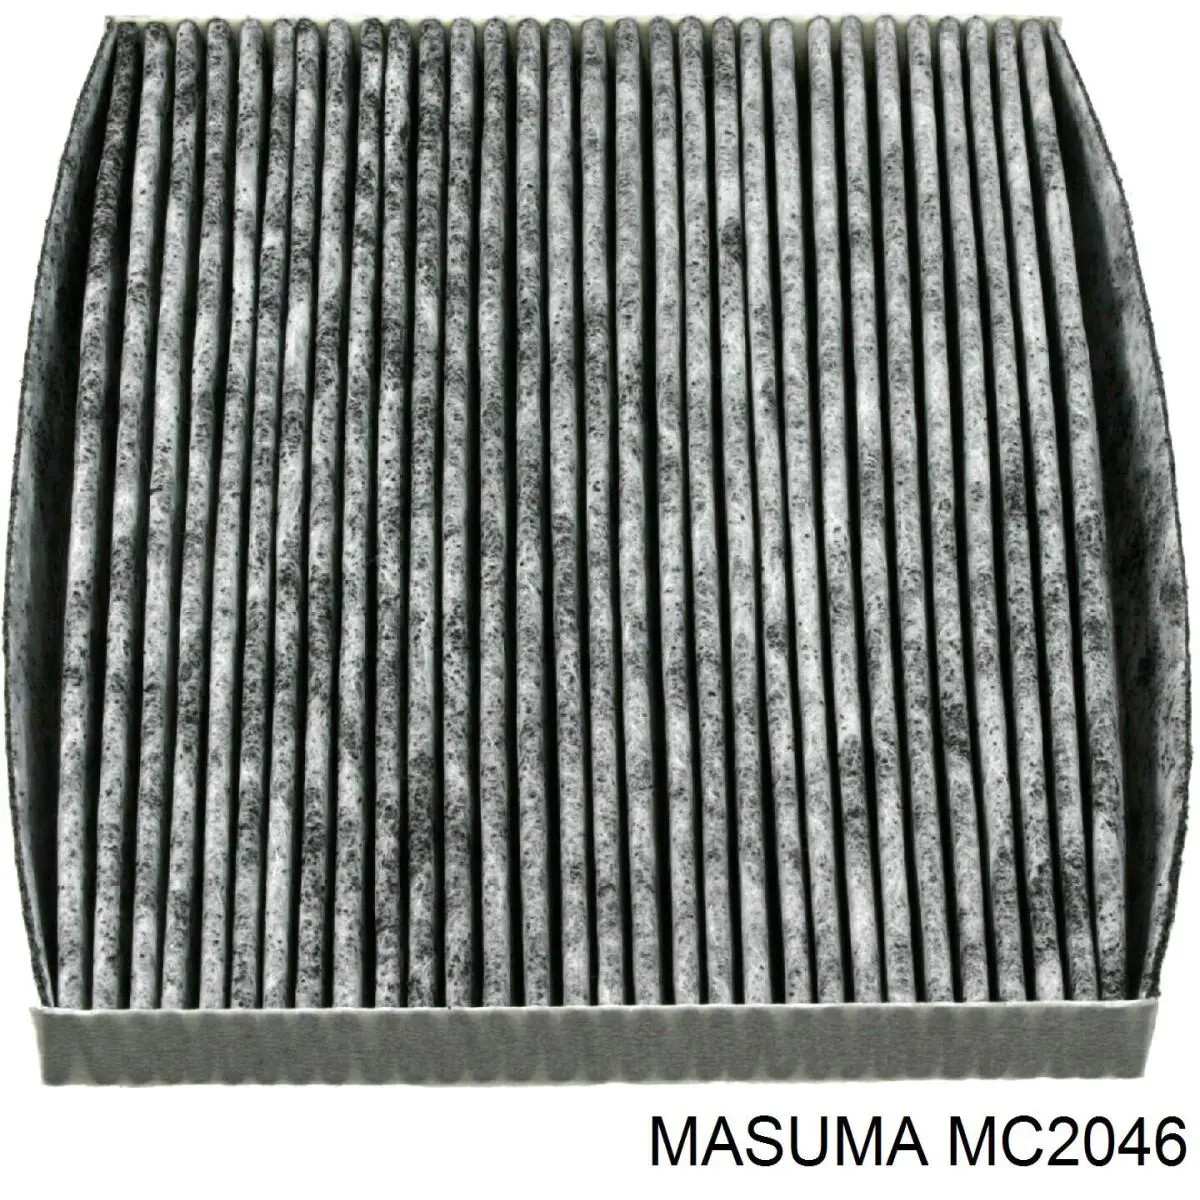 MC2046 Masuma filtro habitáculo